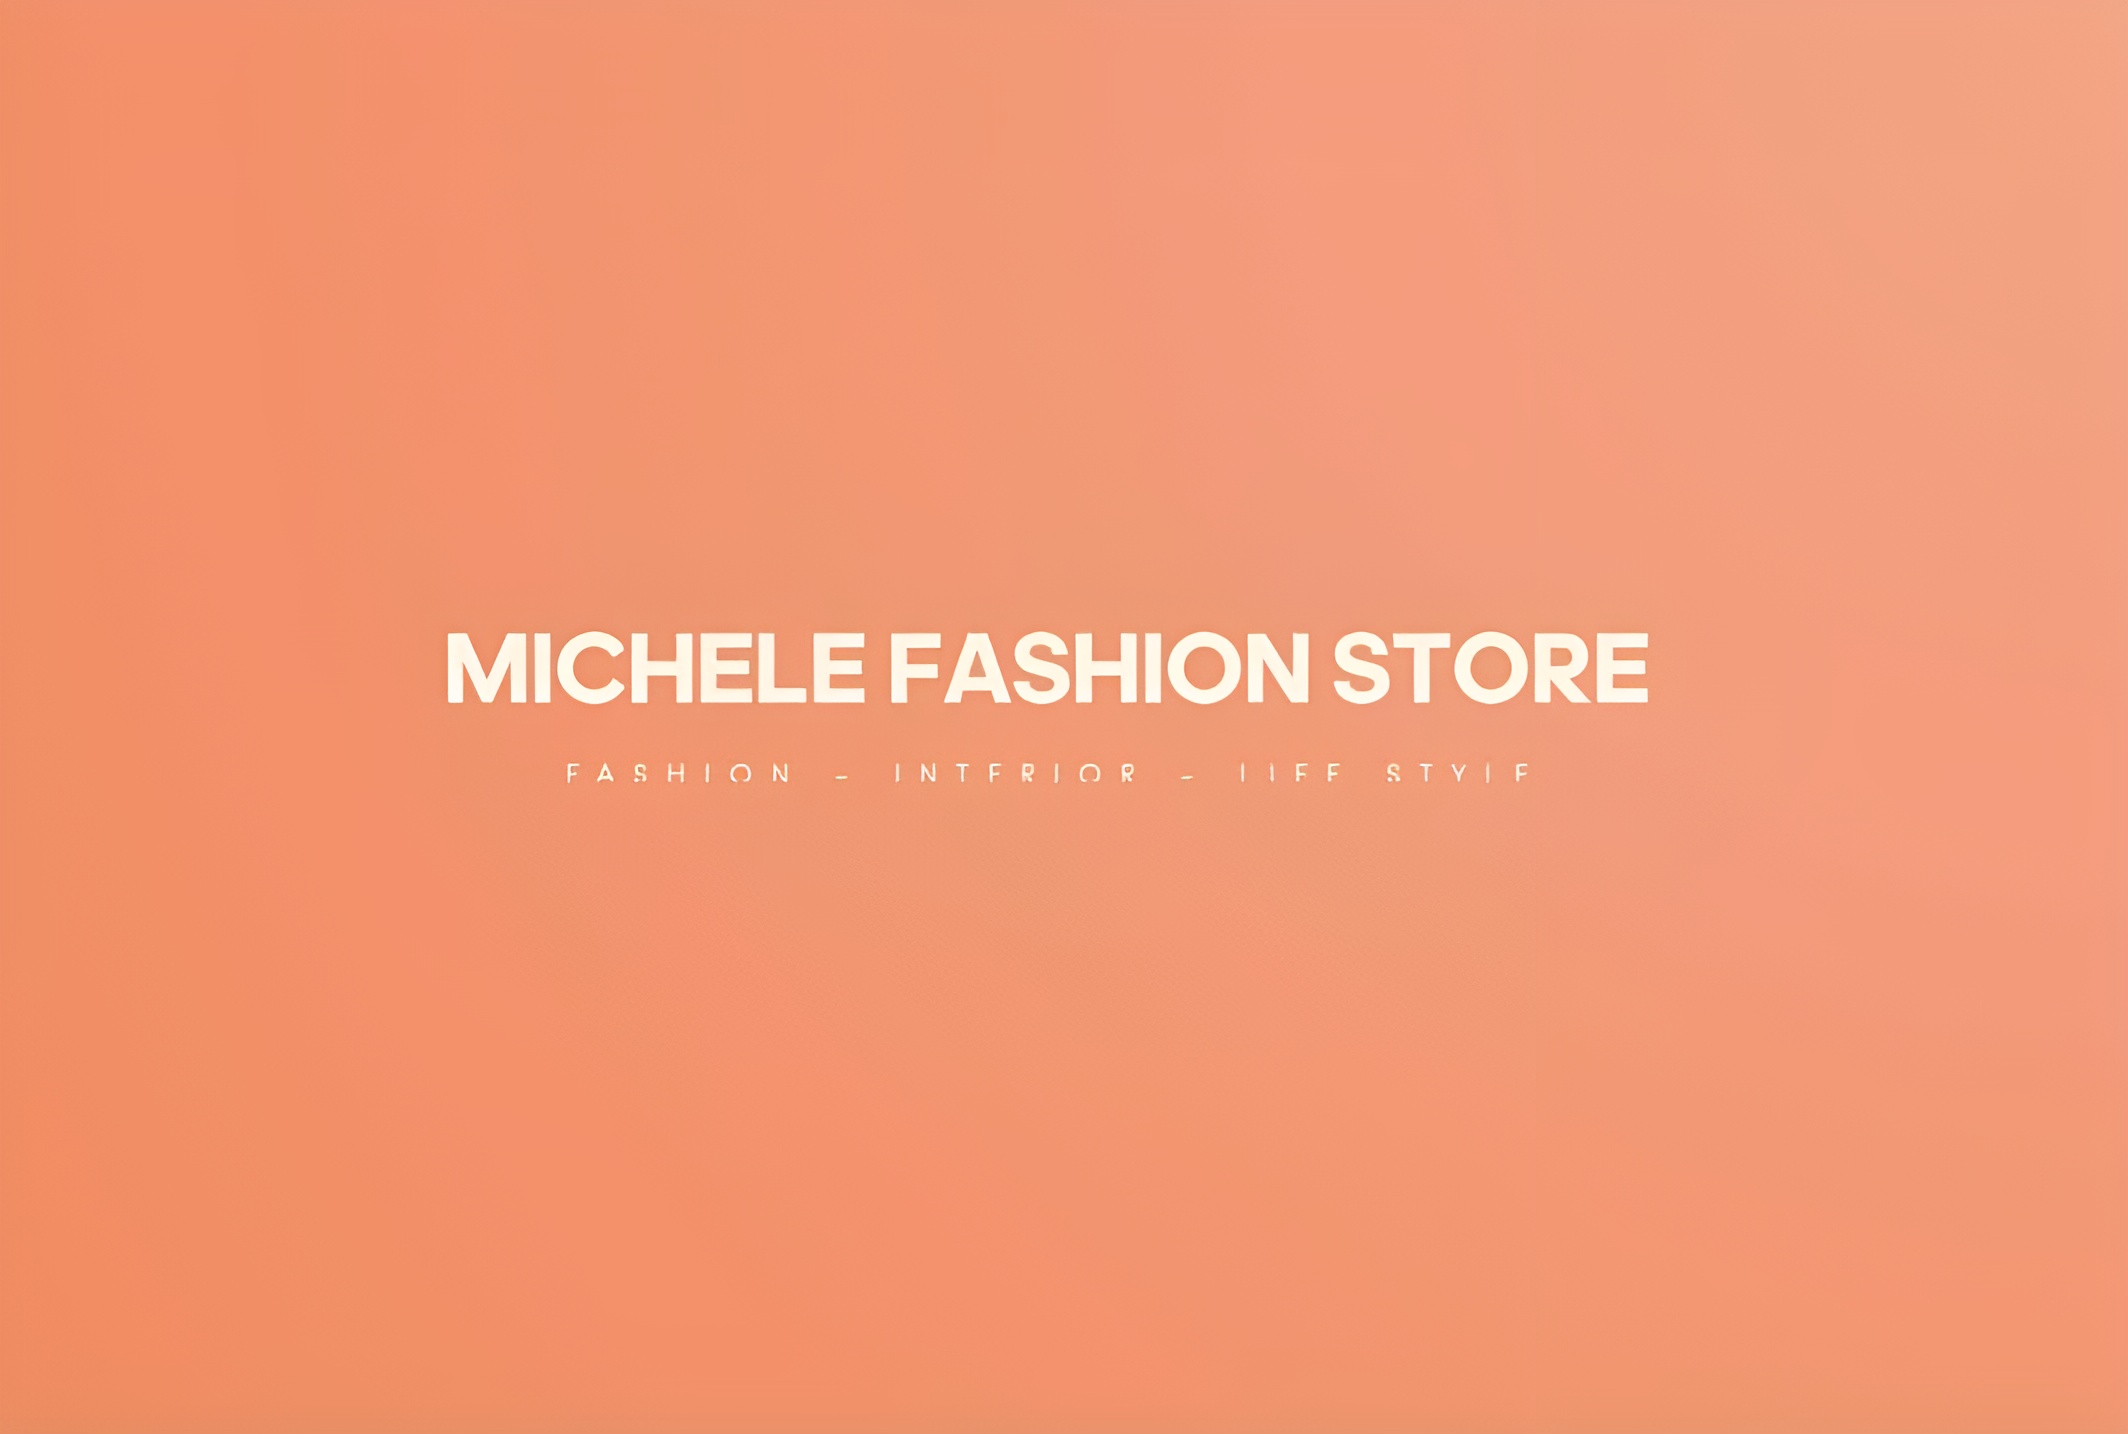 Michele Fashion Store